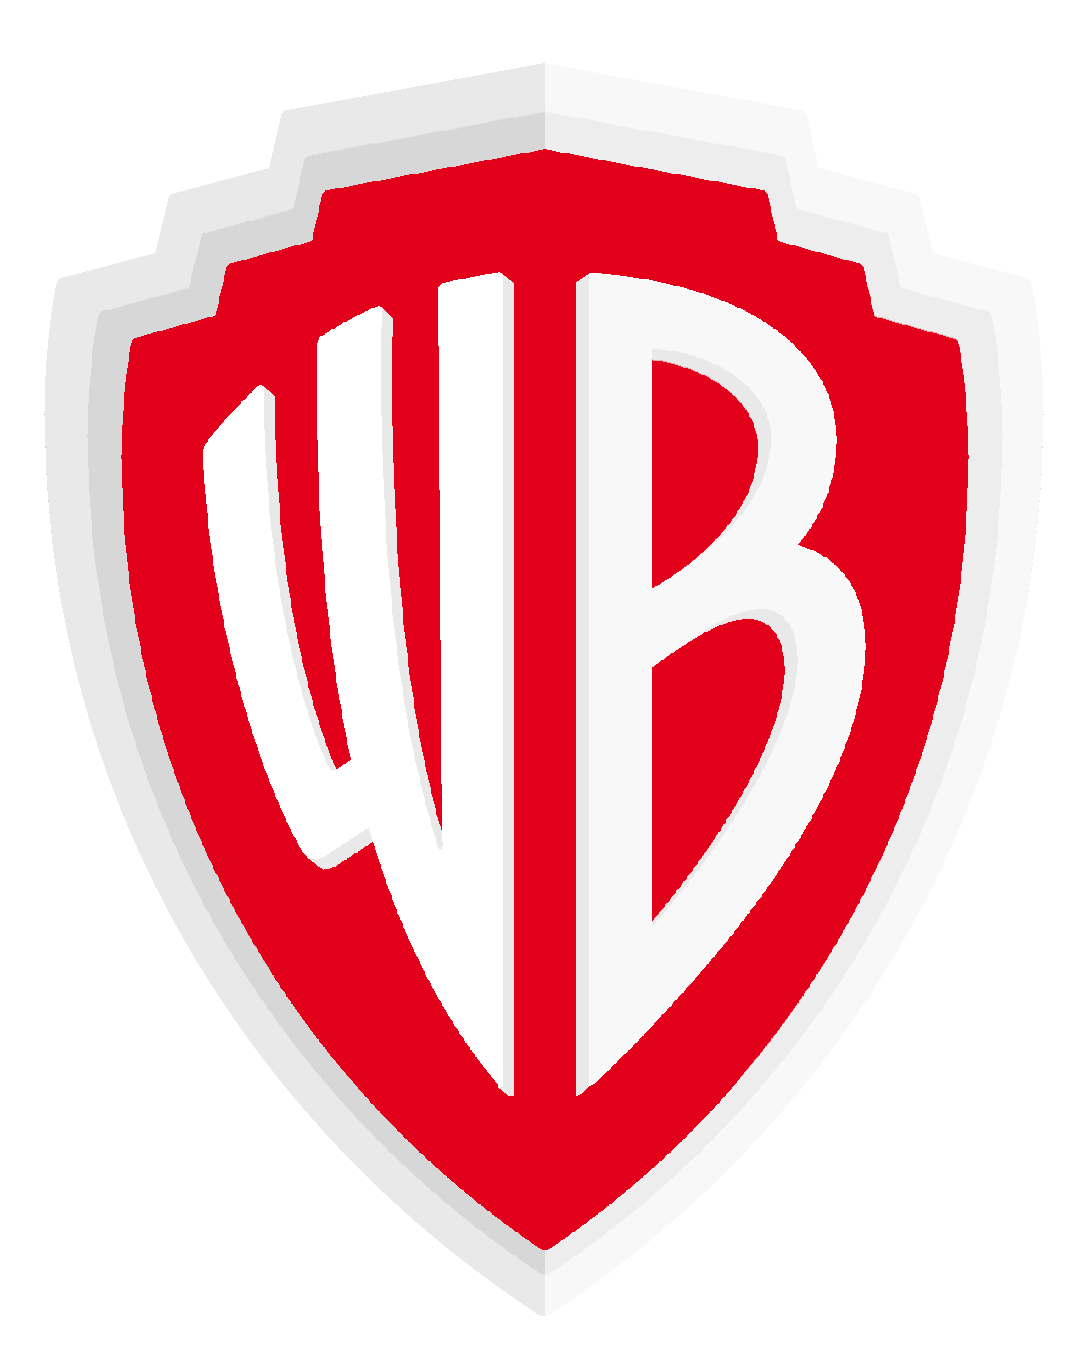 Варнер брос. Ворнер БРОС. WB логотип. Варнер БРОС логотип. Warner Bros логотип 2020.